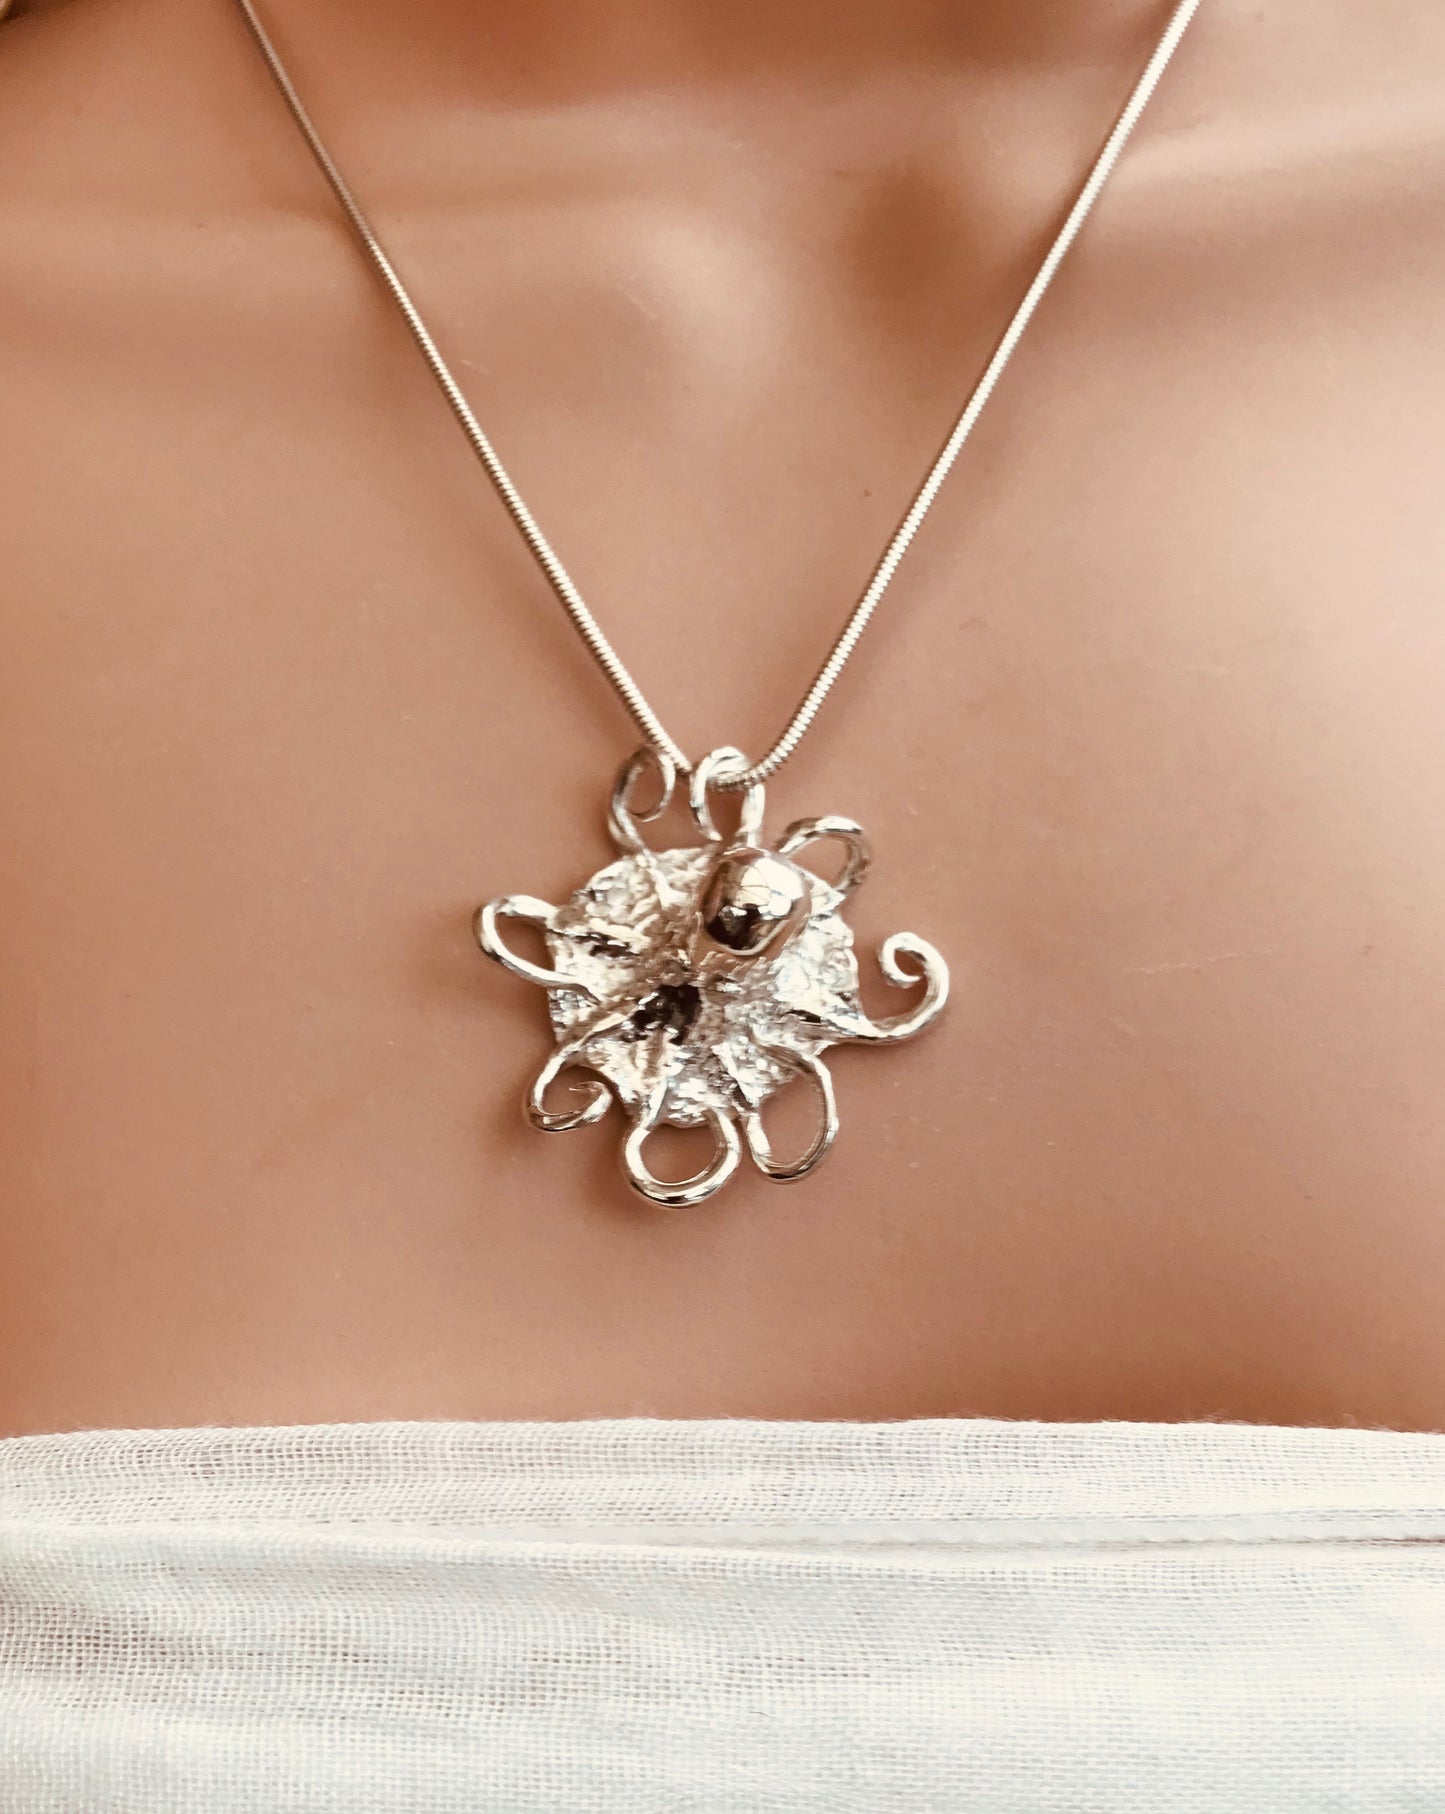 Silver octopus necklace